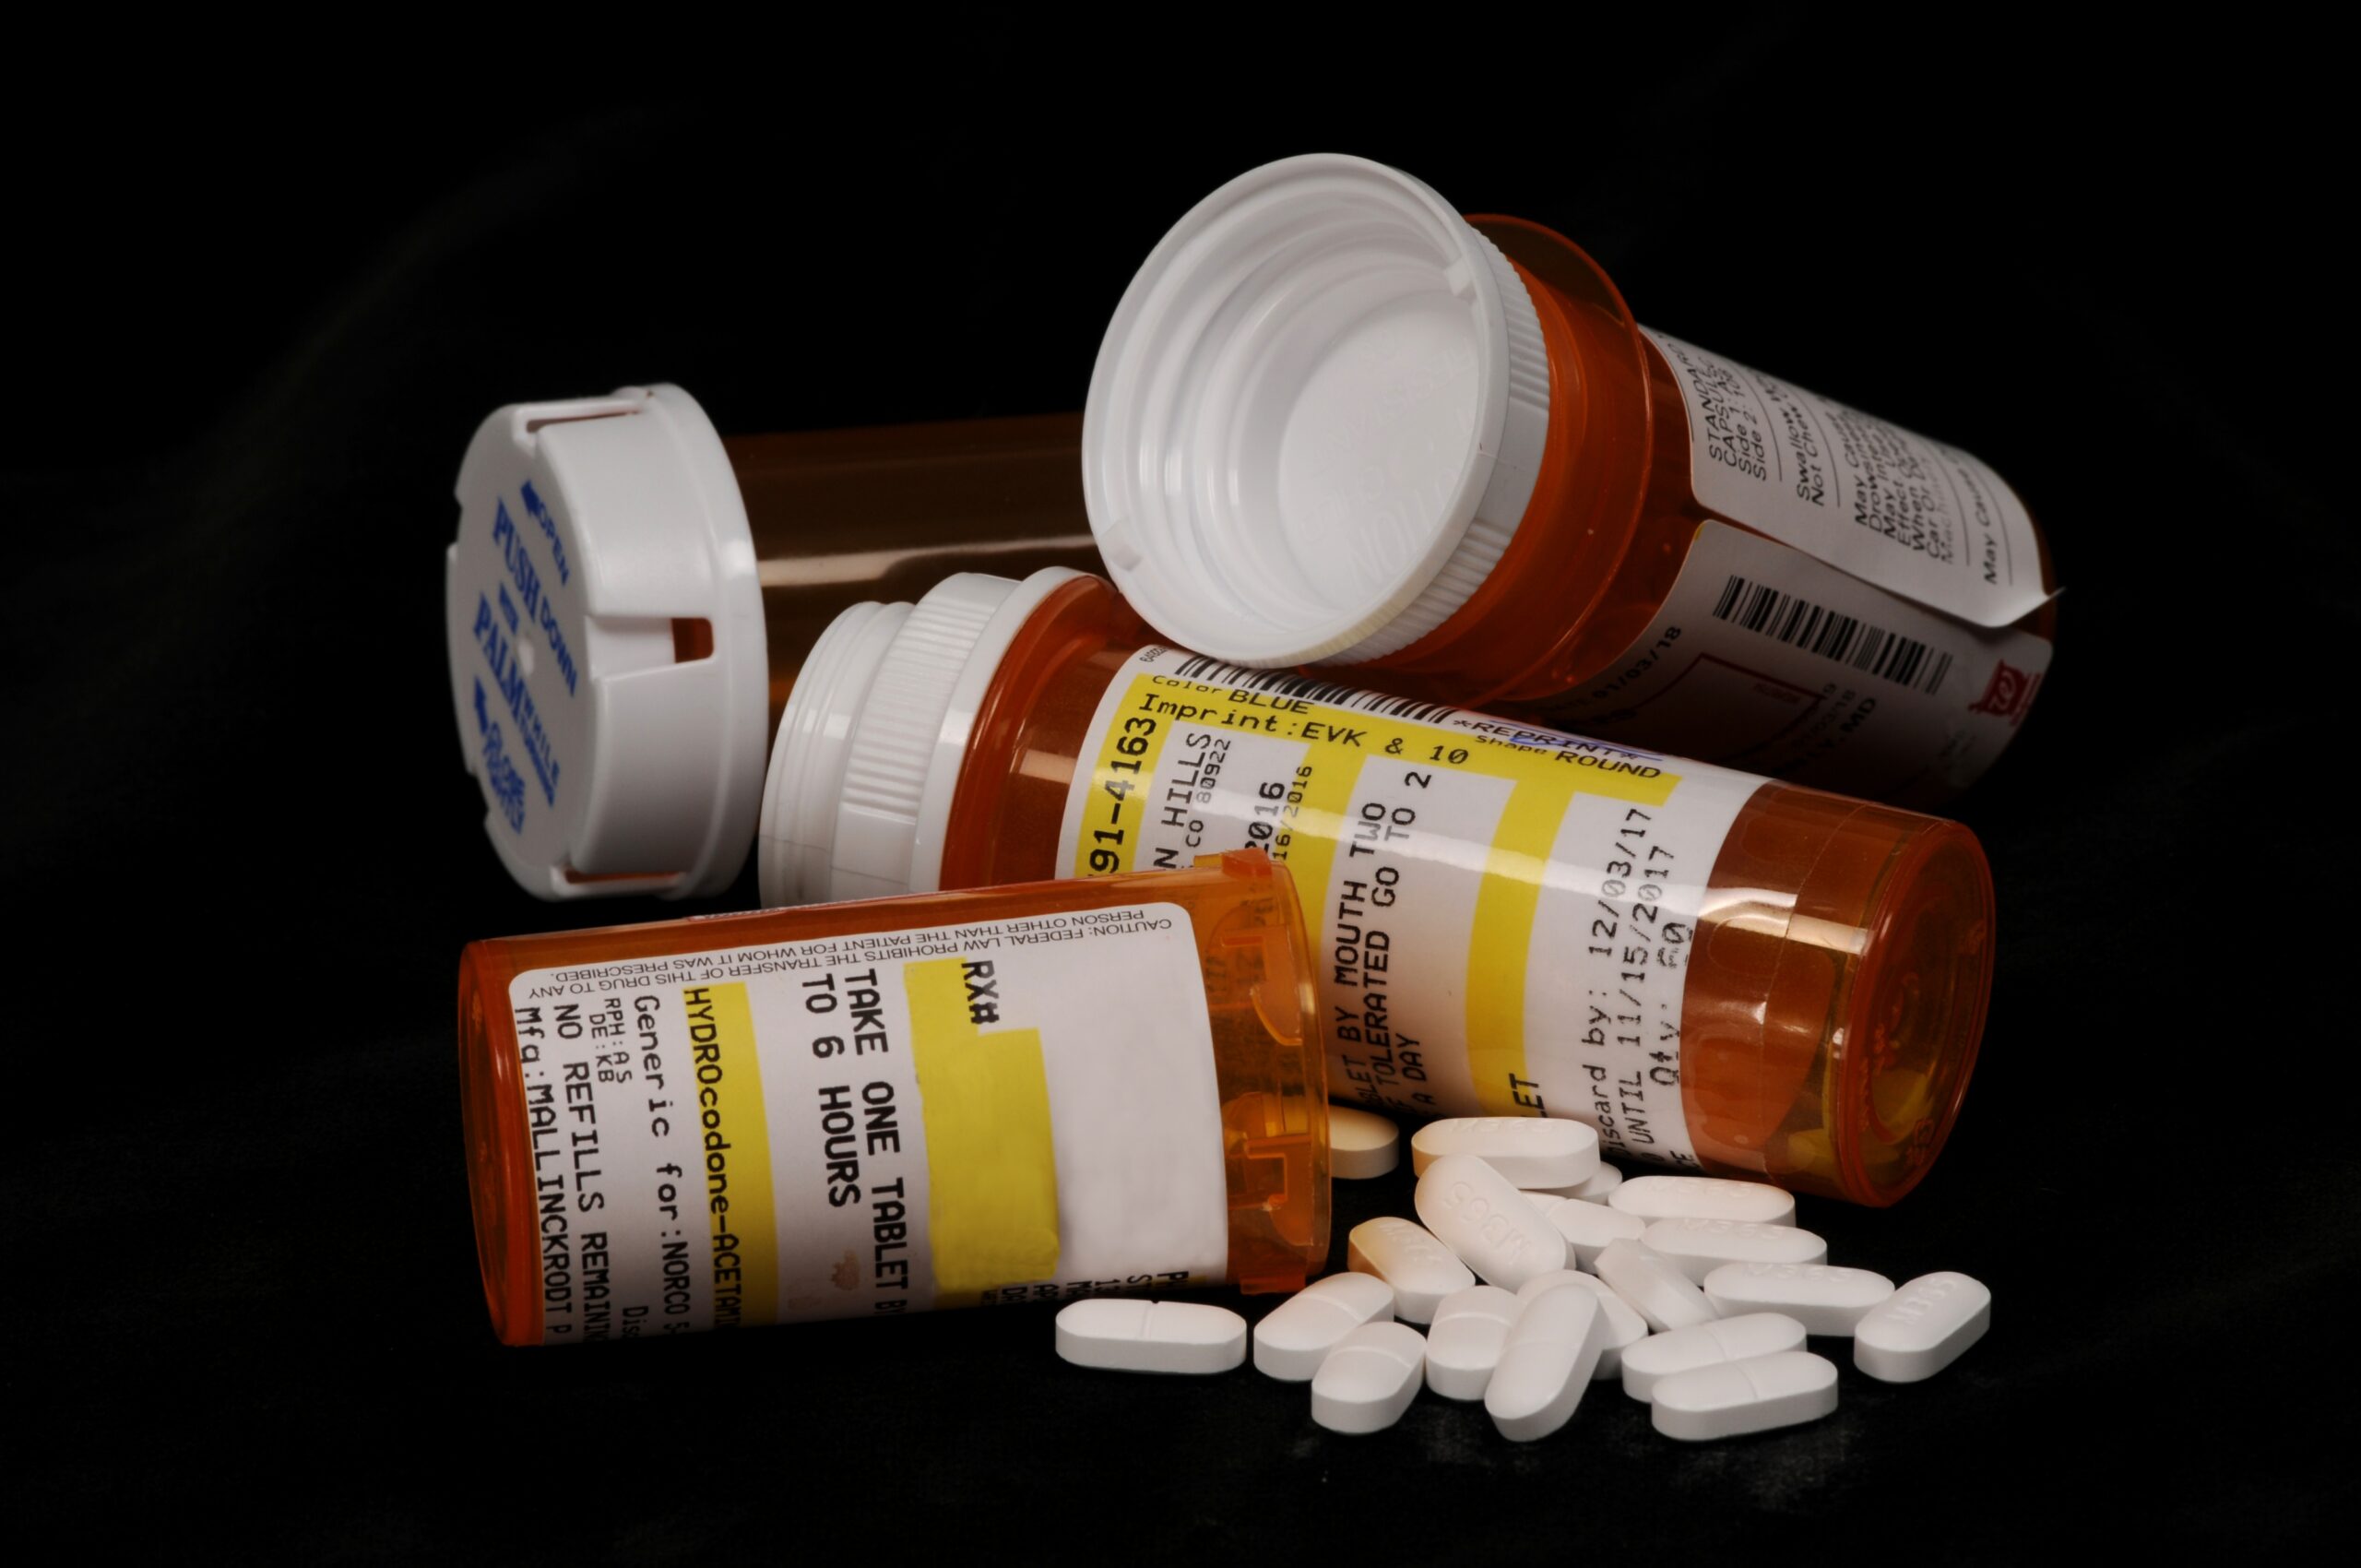 Opioids and prescription medicine bottles.